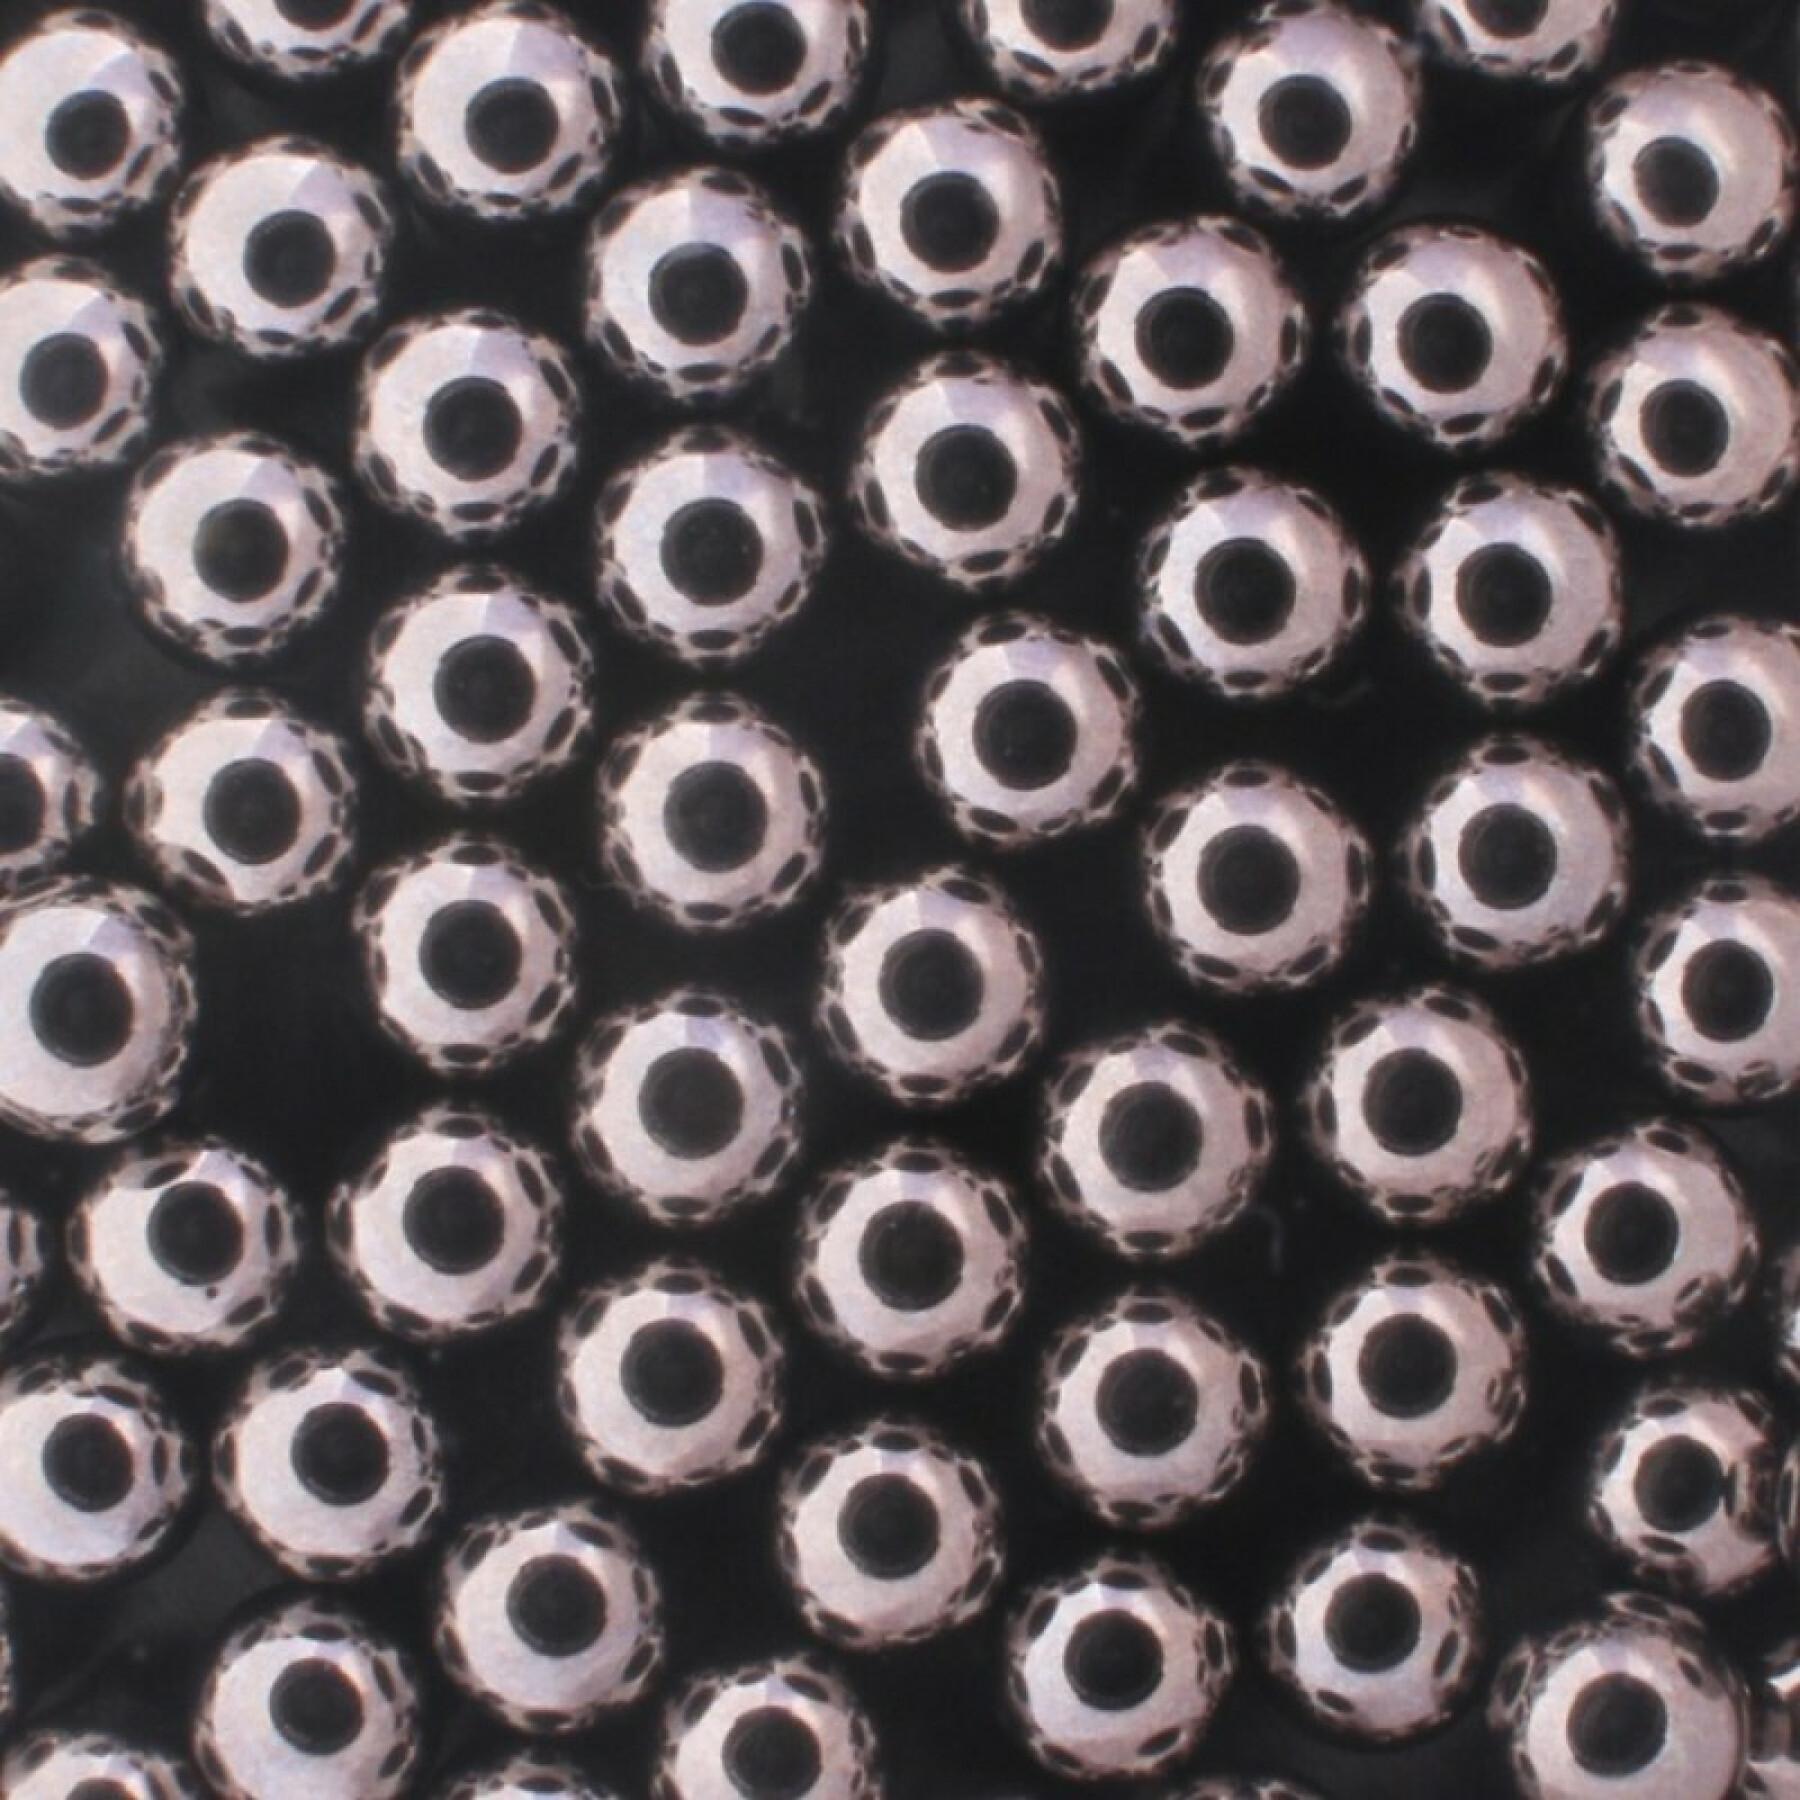 Bearing balls Enduro Bearings Grade 25 Chromium Steel 1/8 3,175 mm (x100)